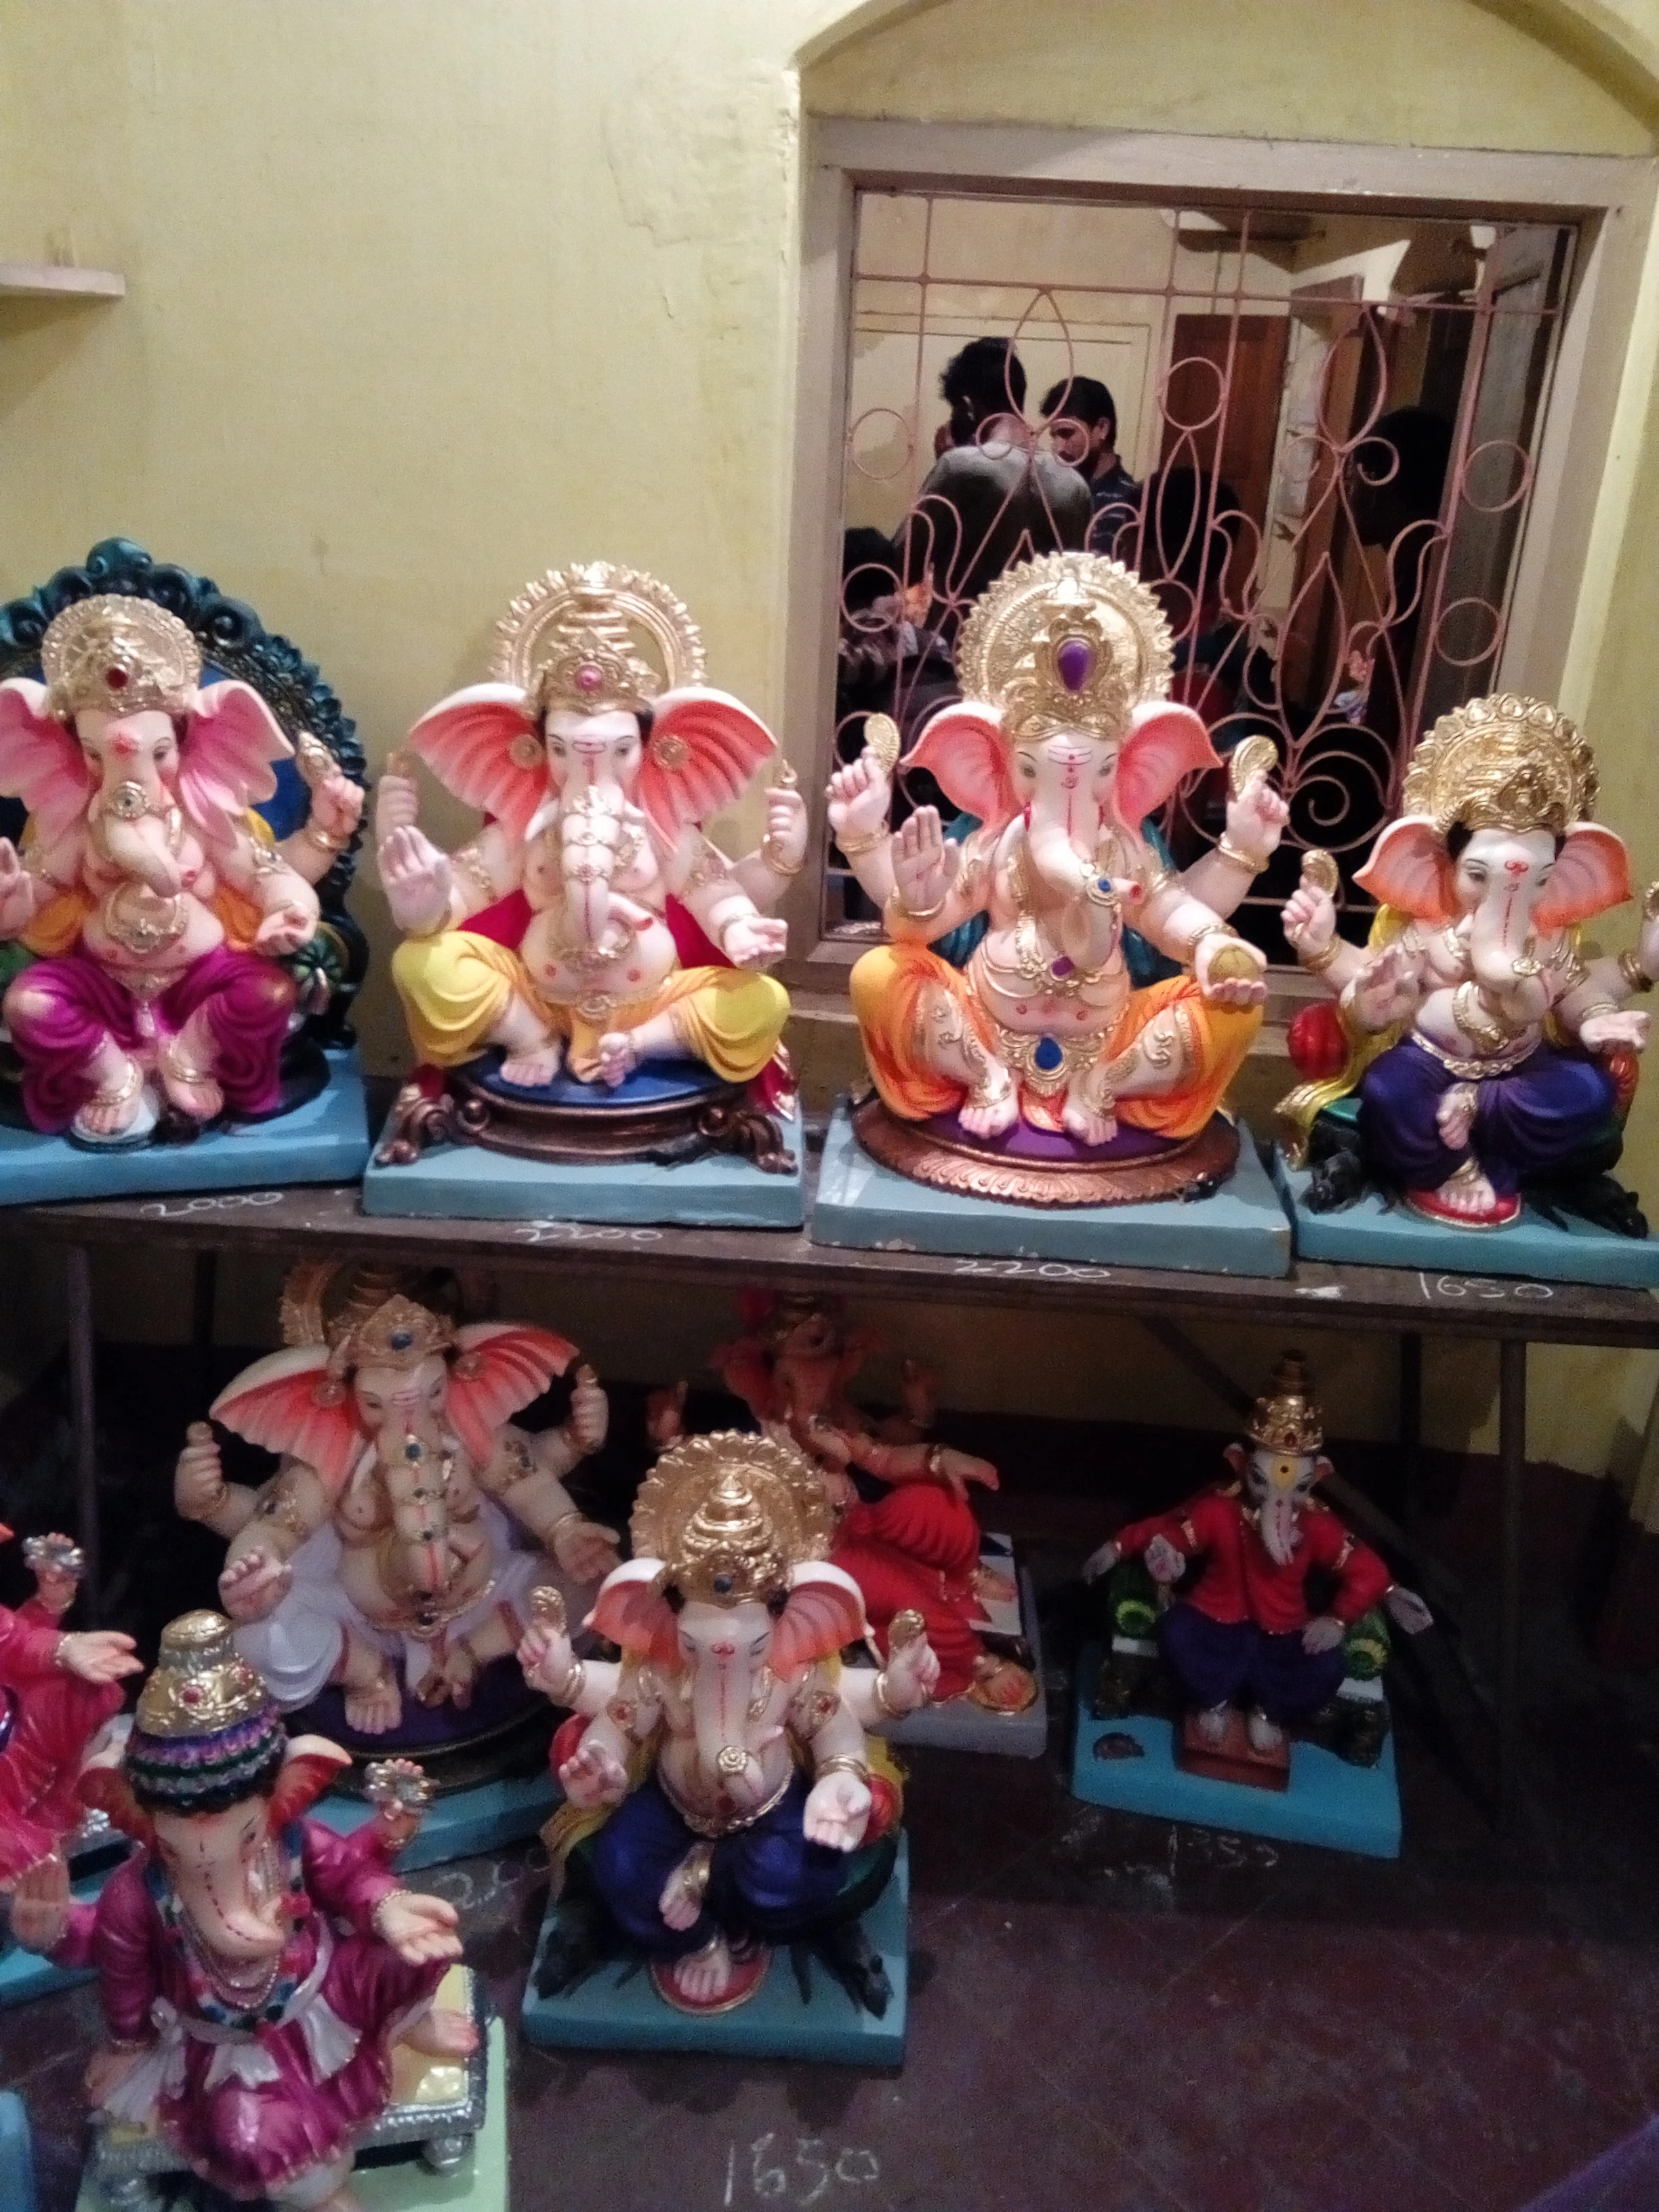 Ganesh arts